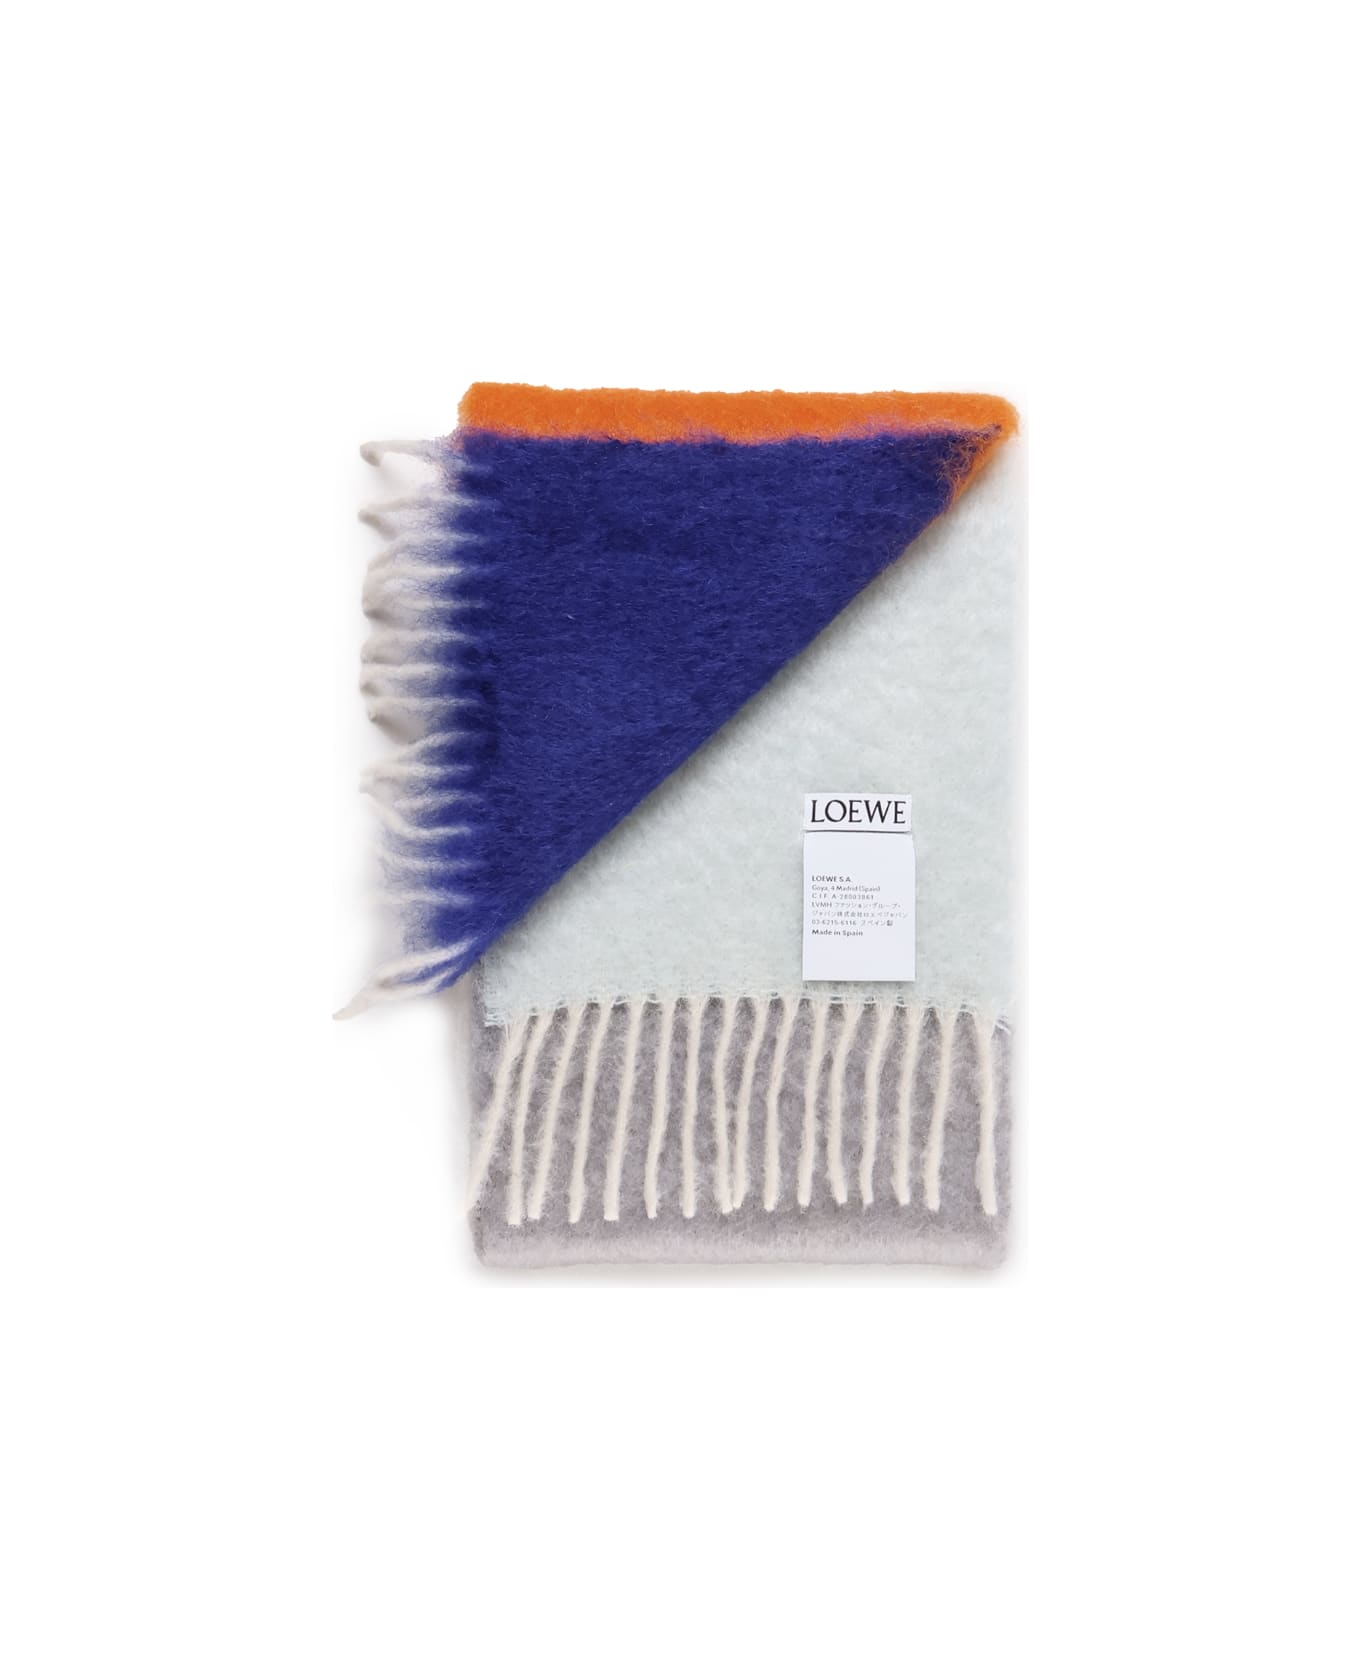 Loewe brogues Wool And Mohair Striped Scarf - Blue, orange, grey